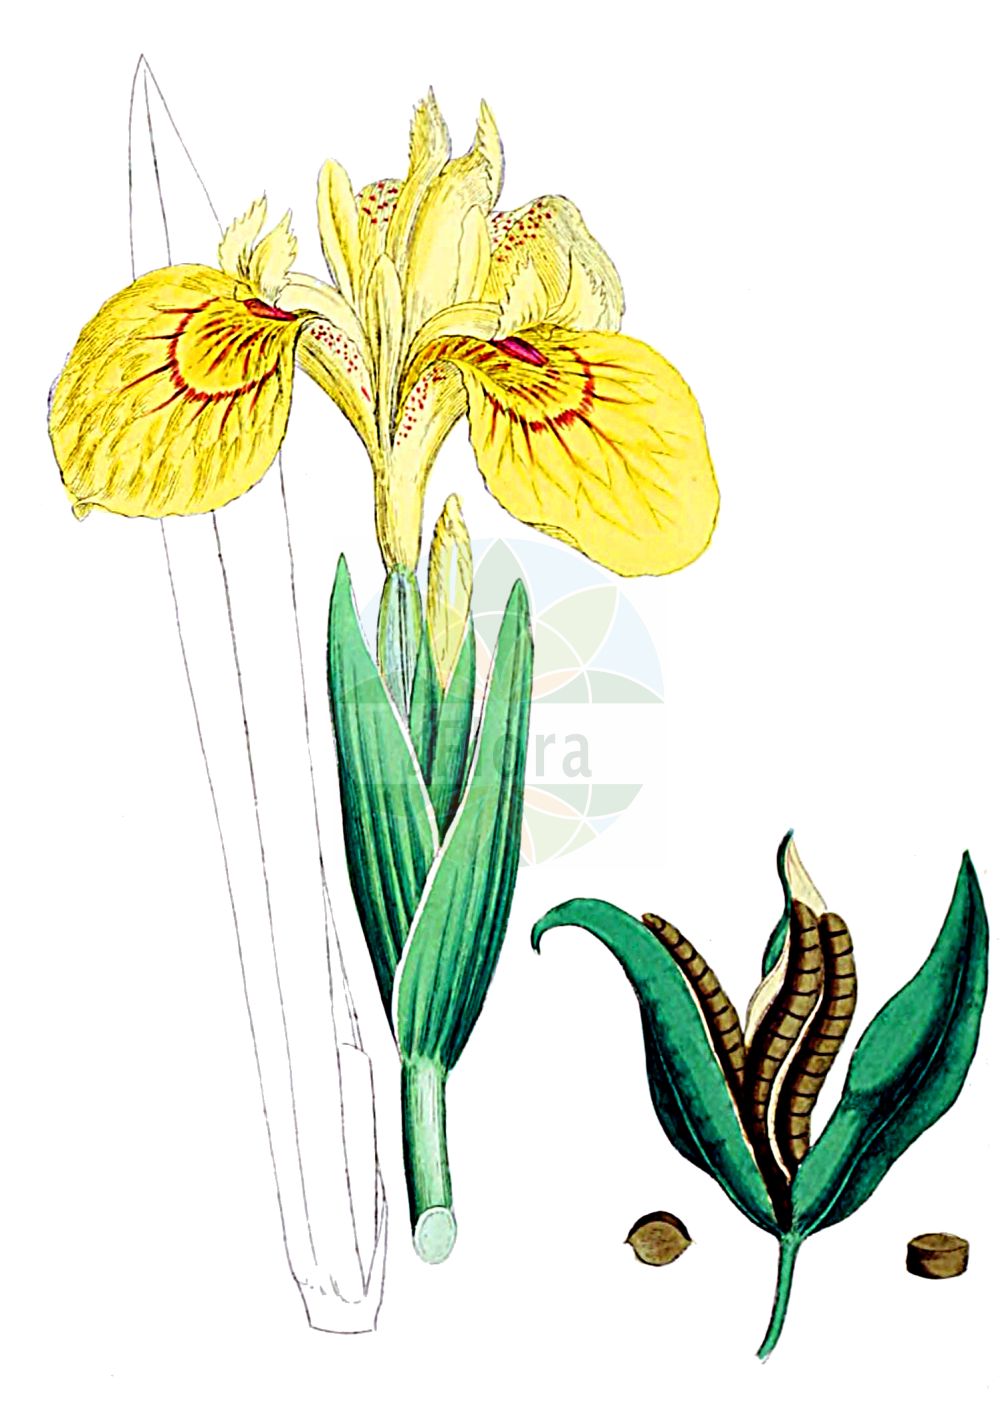 Historische Abbildung von Iris pseudacorus (Sumpf-Schwertlilie - Yellow Iris). Das Bild zeigt Blatt, Bluete, Frucht und Same. ---- Historical Drawing of Iris pseudacorus (Sumpf-Schwertlilie - Yellow Iris). The image is showing leaf, flower, fruit and seed.(Iris pseudacorus,Sumpf-Schwertlilie,Yellow Iris,Acorus adulterinus,Colchicum falcifolium,Iris acoriformis,Iris acoroides,Iris bastardii,Iris curtopetala,Iris flava,Iris lutea,Iris pallidior,Iris paludosa,Iris palustris,Iris pseudacorus,Iris sativa,Limnirion pseudacorus,Limniris pseudacorus,Moraea candolleana,Pseudo-iris palustris,Vieusseuxia iridioides,Xiphion acoroides,Xiphion pseudacorus,Xyridion acoroideum,Xyridion pseudacorus,Sumpf-Schwertlilie,Gelbe Schwertlilie,Wasser-Schwertlilie,Yellow Iris,Jacob's Wort,Paleyellow Iris,Rocky Mountain Iris,Water Flag,Yellow Flag,Yellow-flag Iris,Iris,Schwertlilie,Iris,Iridaceae,Schwertliliengewächse,Iris family,Blatt,Bluete,Frucht,Same,leaf,flower,fruit,seed,Sowerby (1790-1813))